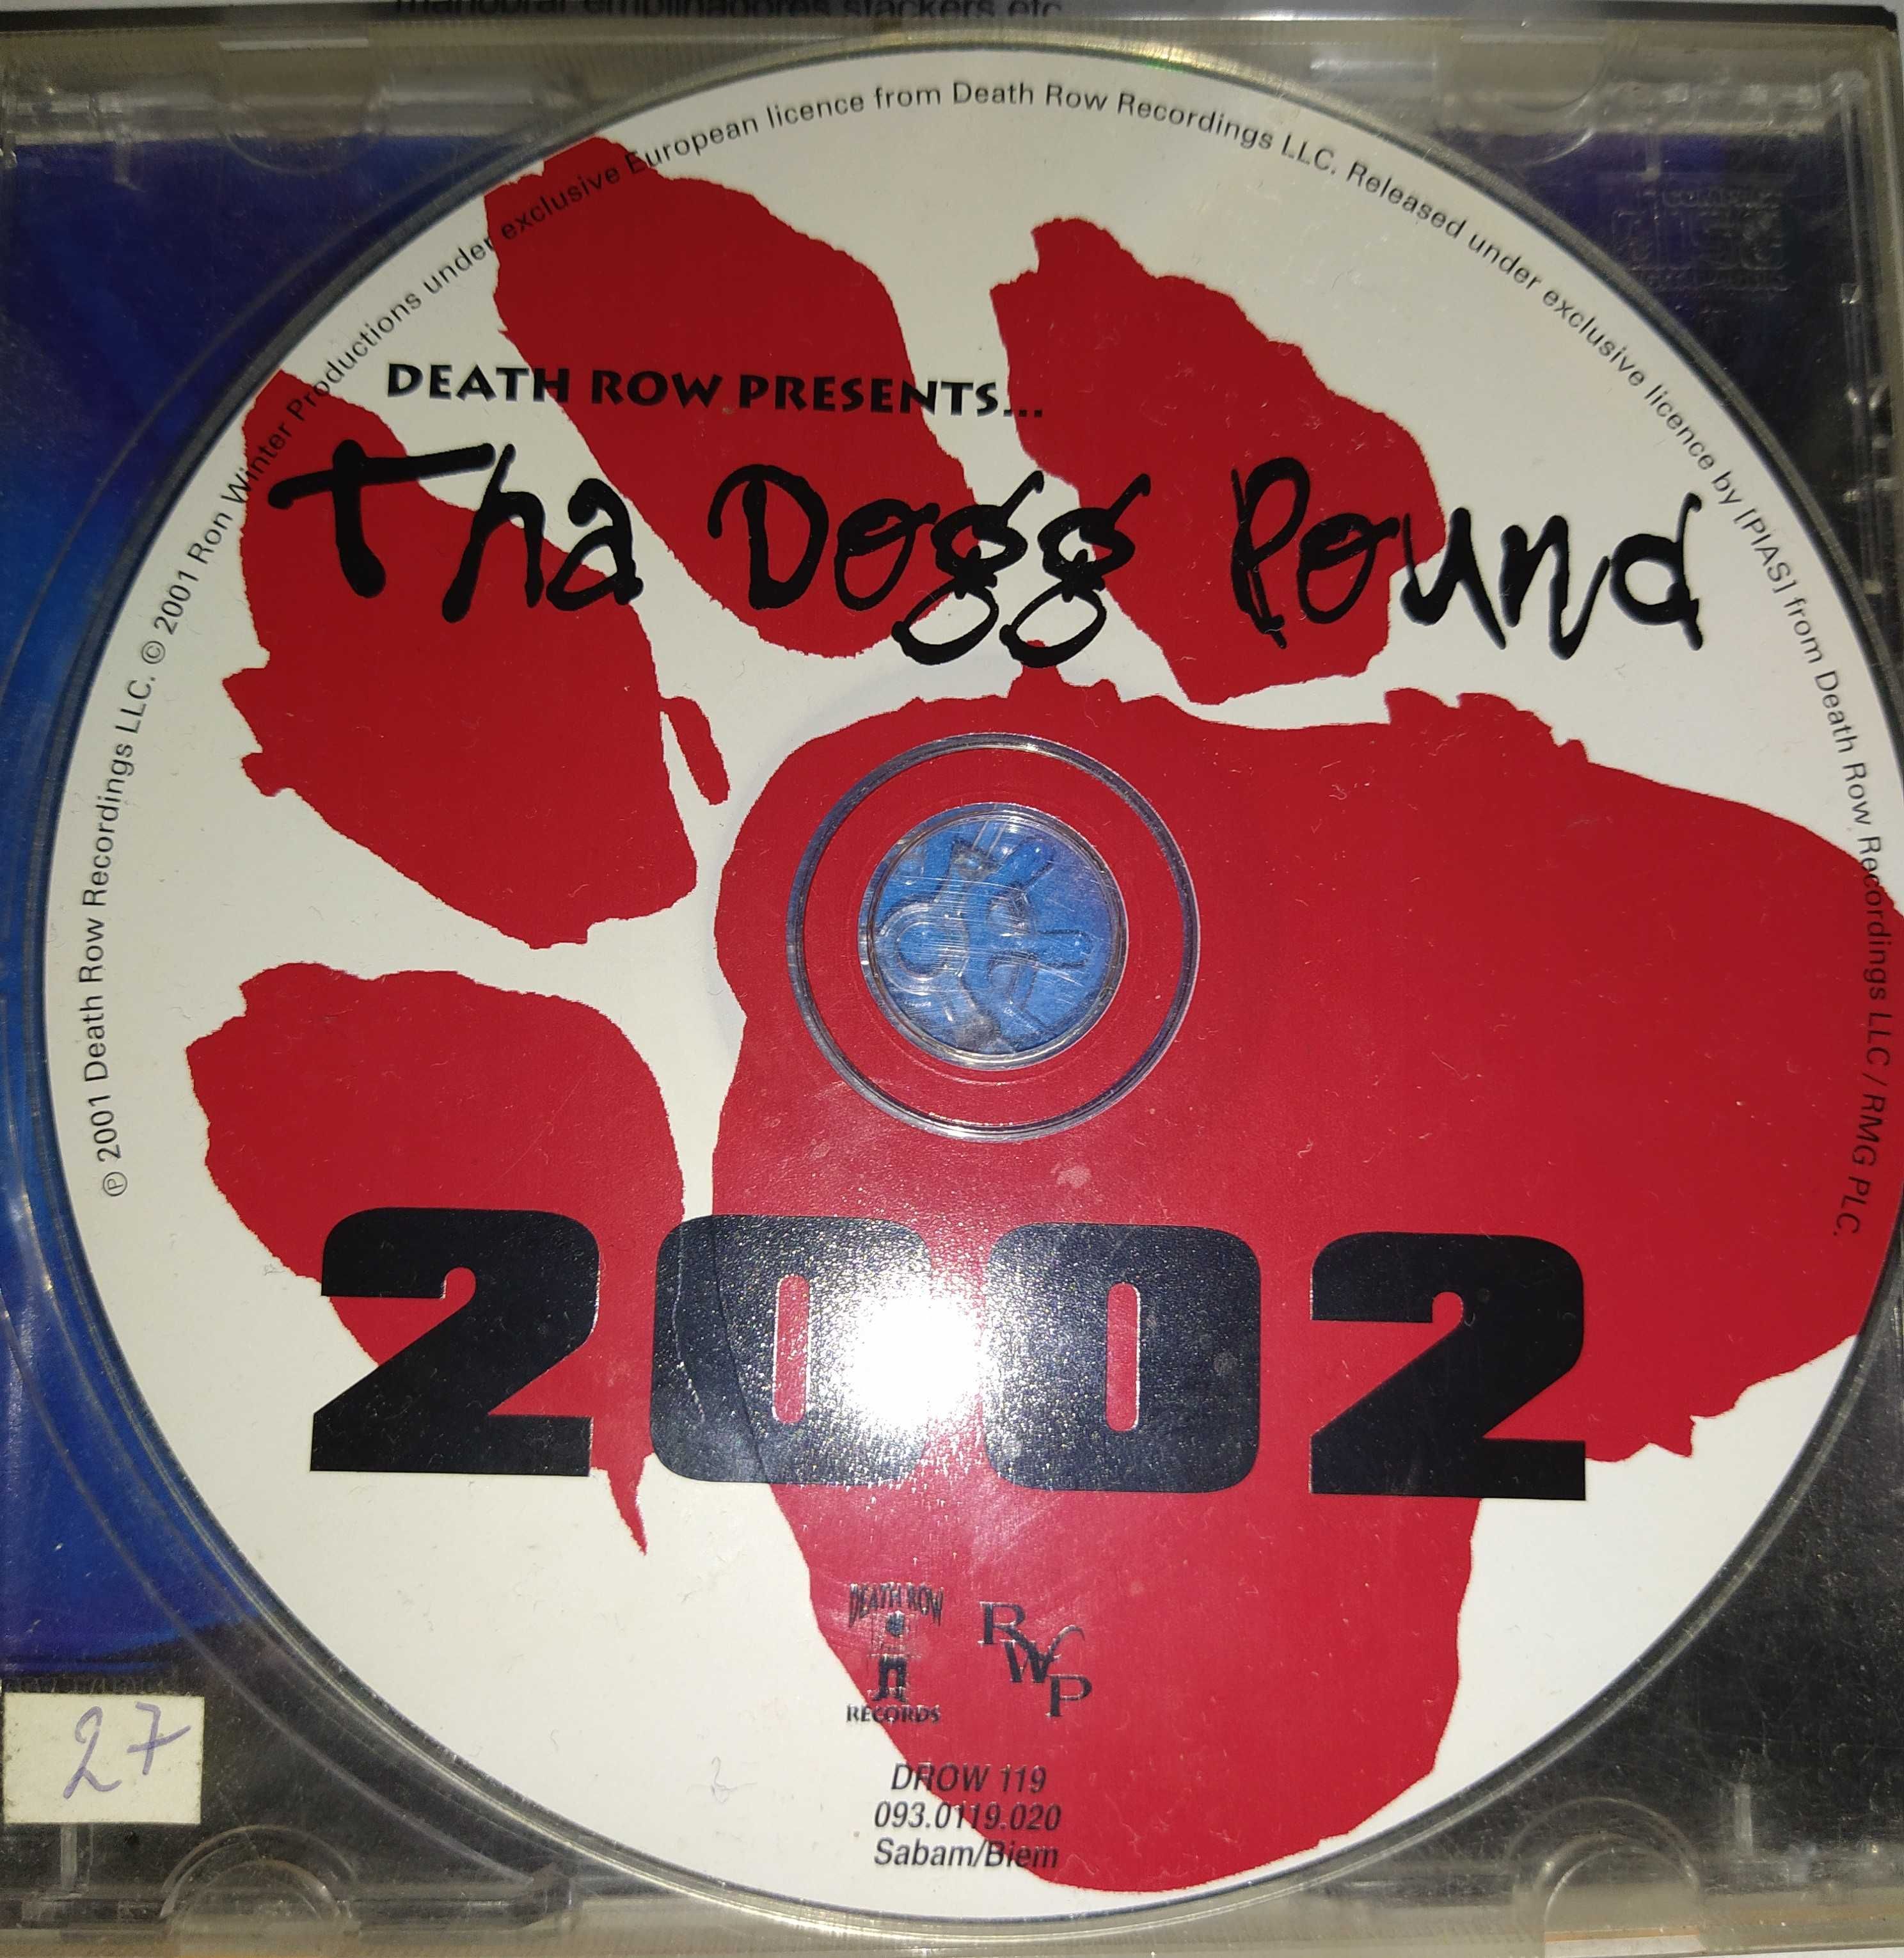 Tha dogg pound 2002